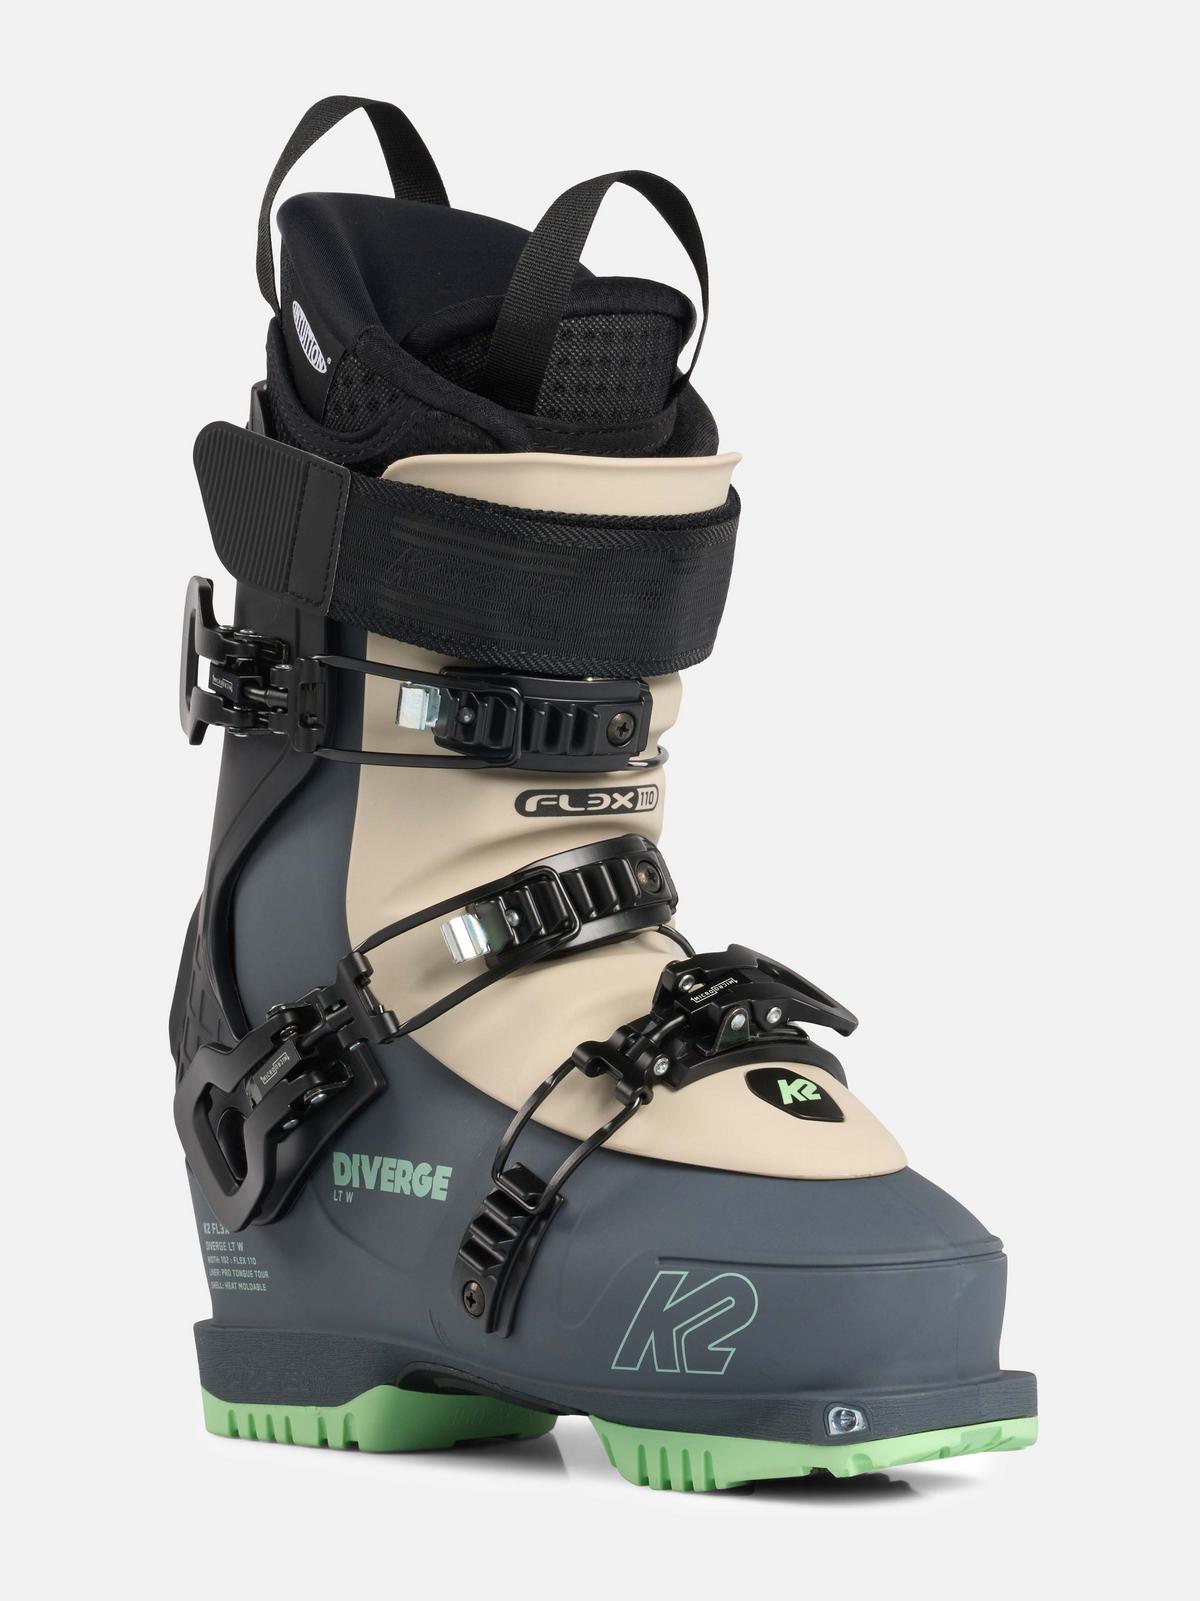 K2 Diverge LT Women's Ski Boots 2023 | K2 Skis and K2 Snowboarding